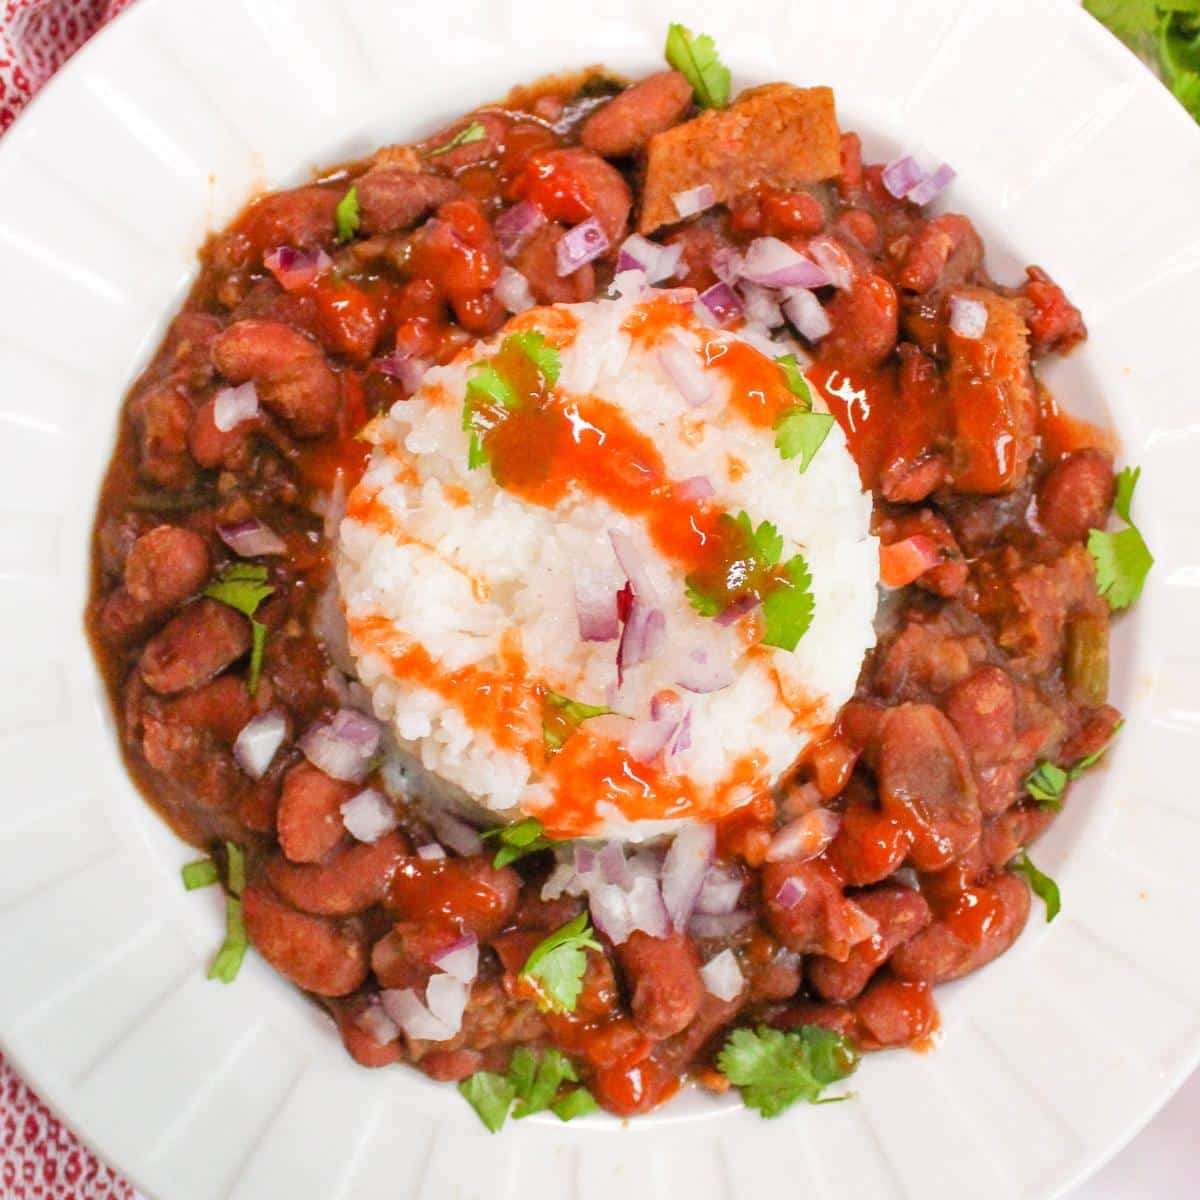 https://damntastyvegan.com/wp-content/uploads/2019/01/New-orleans-vegan-red-beans-and-rice-recipe.jpg